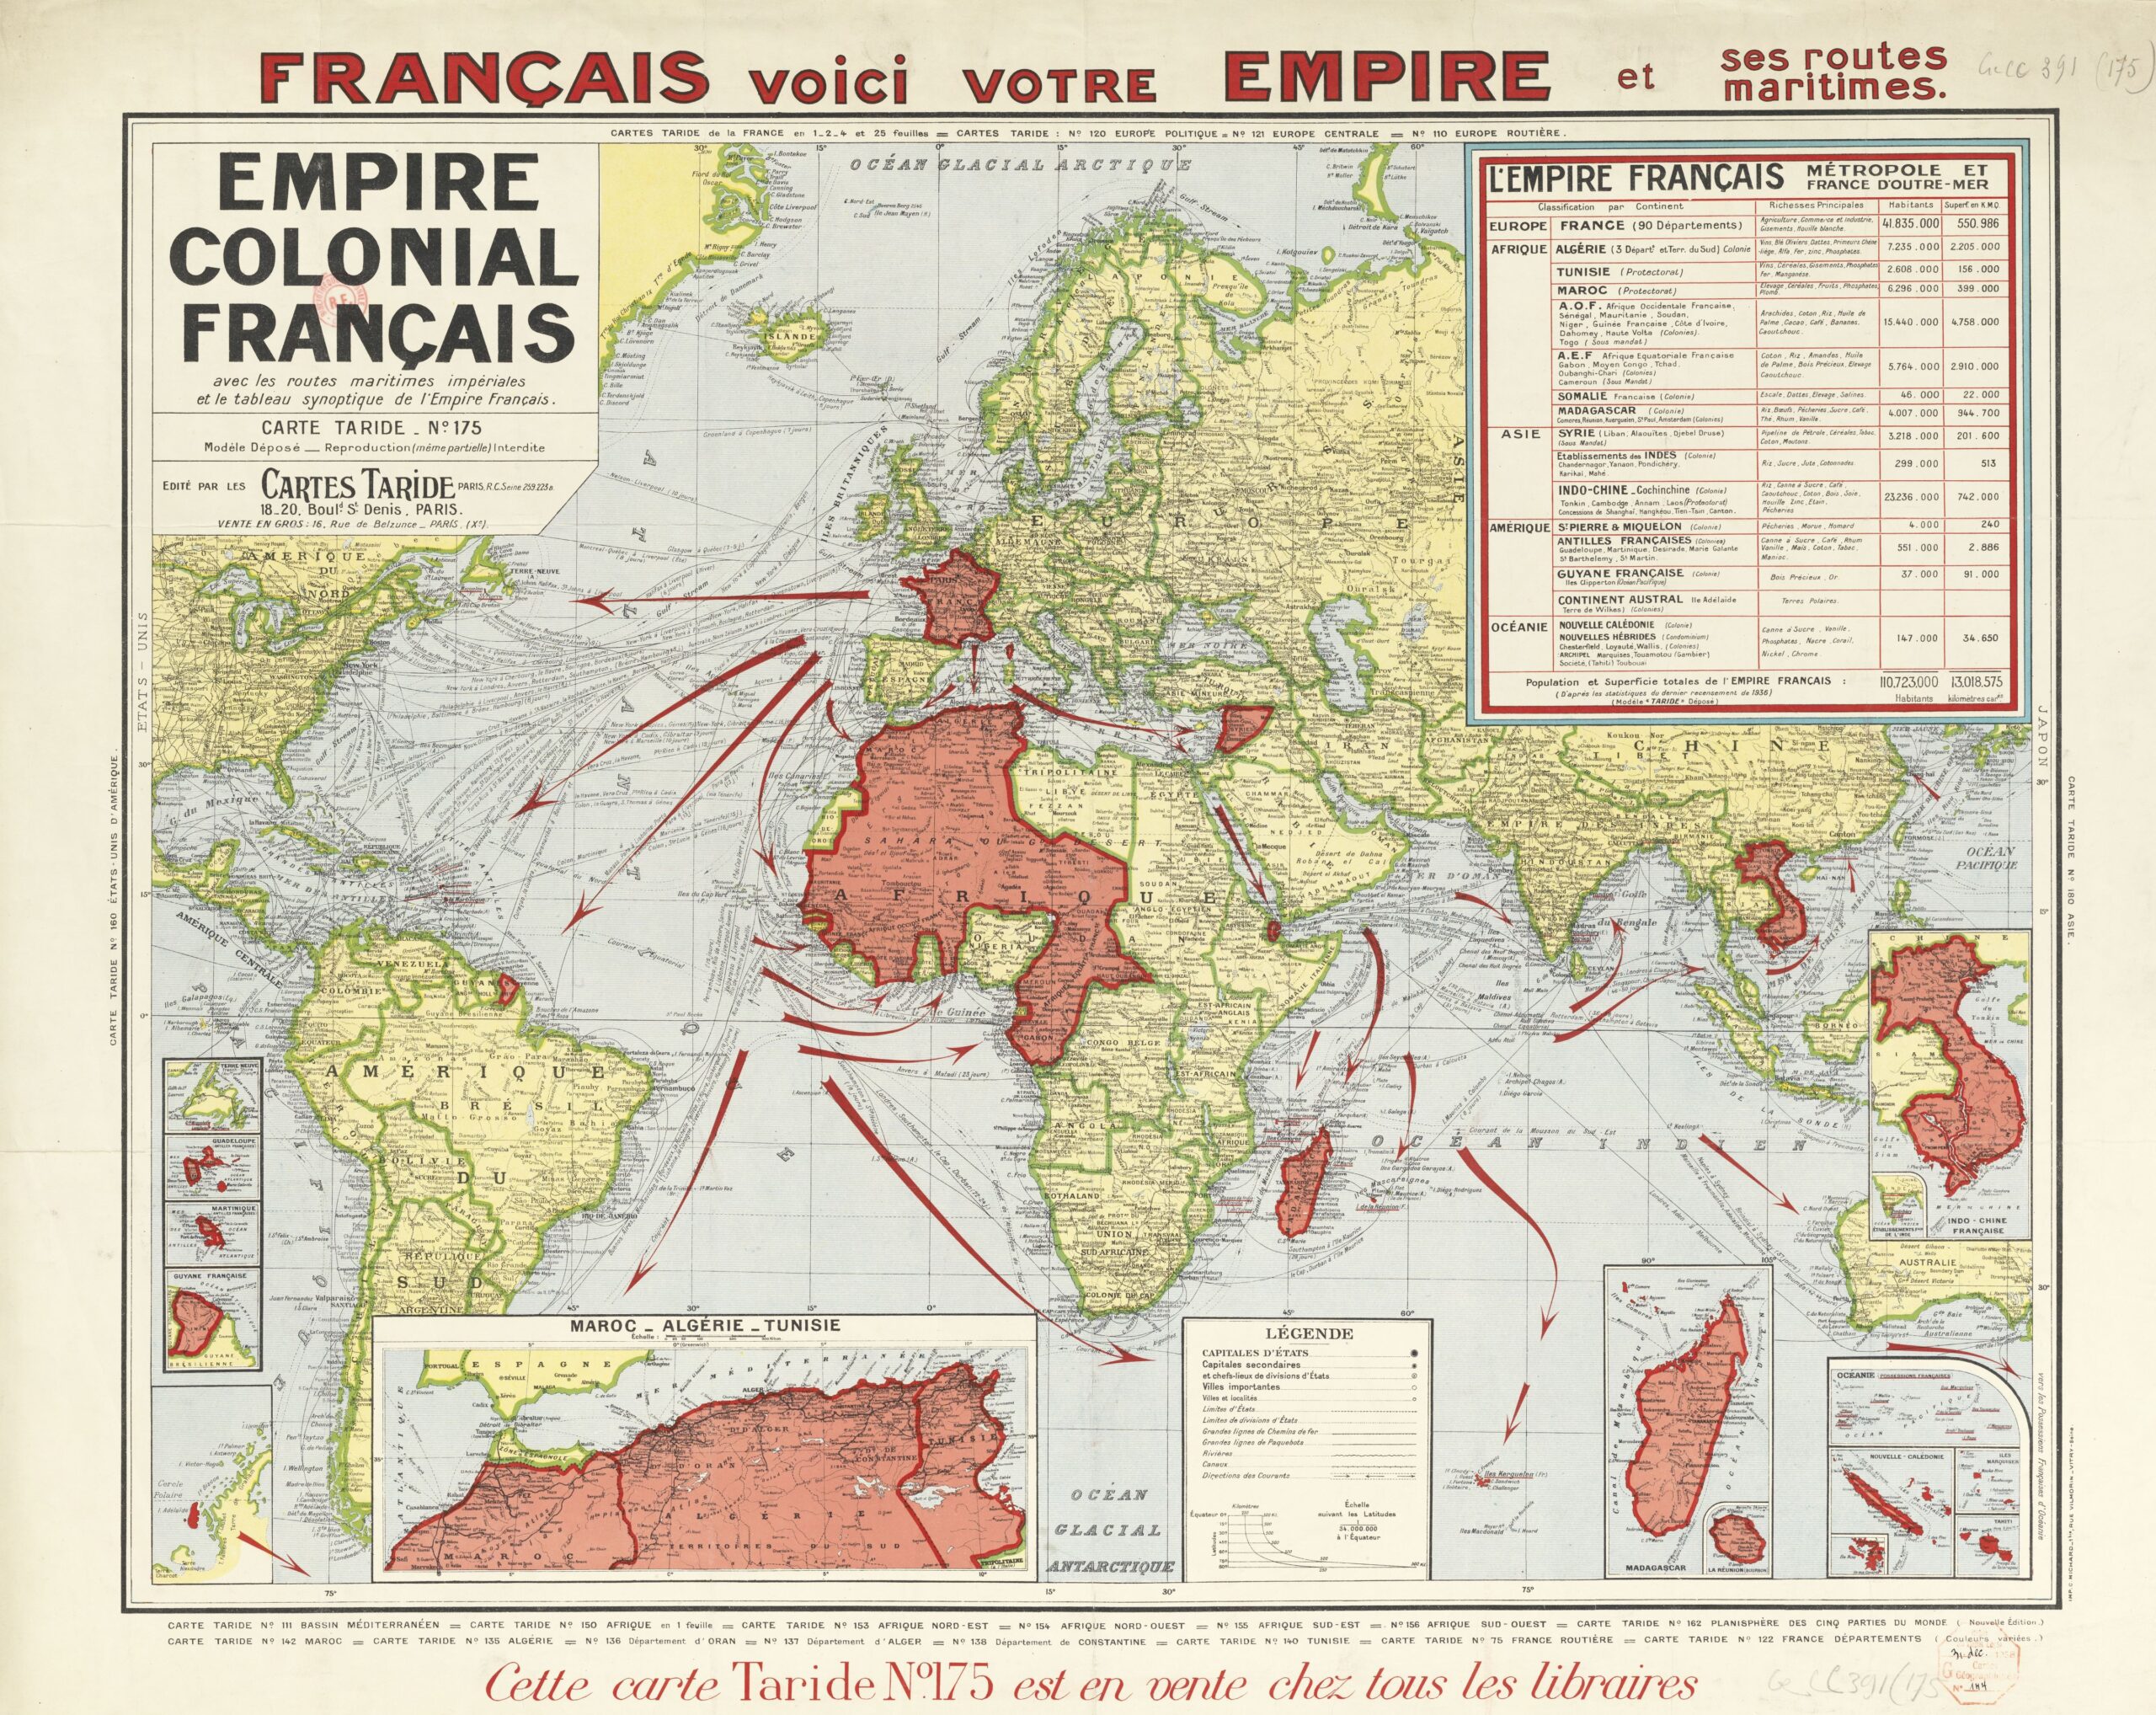 Franceses, este es vuestro imperio (1938)